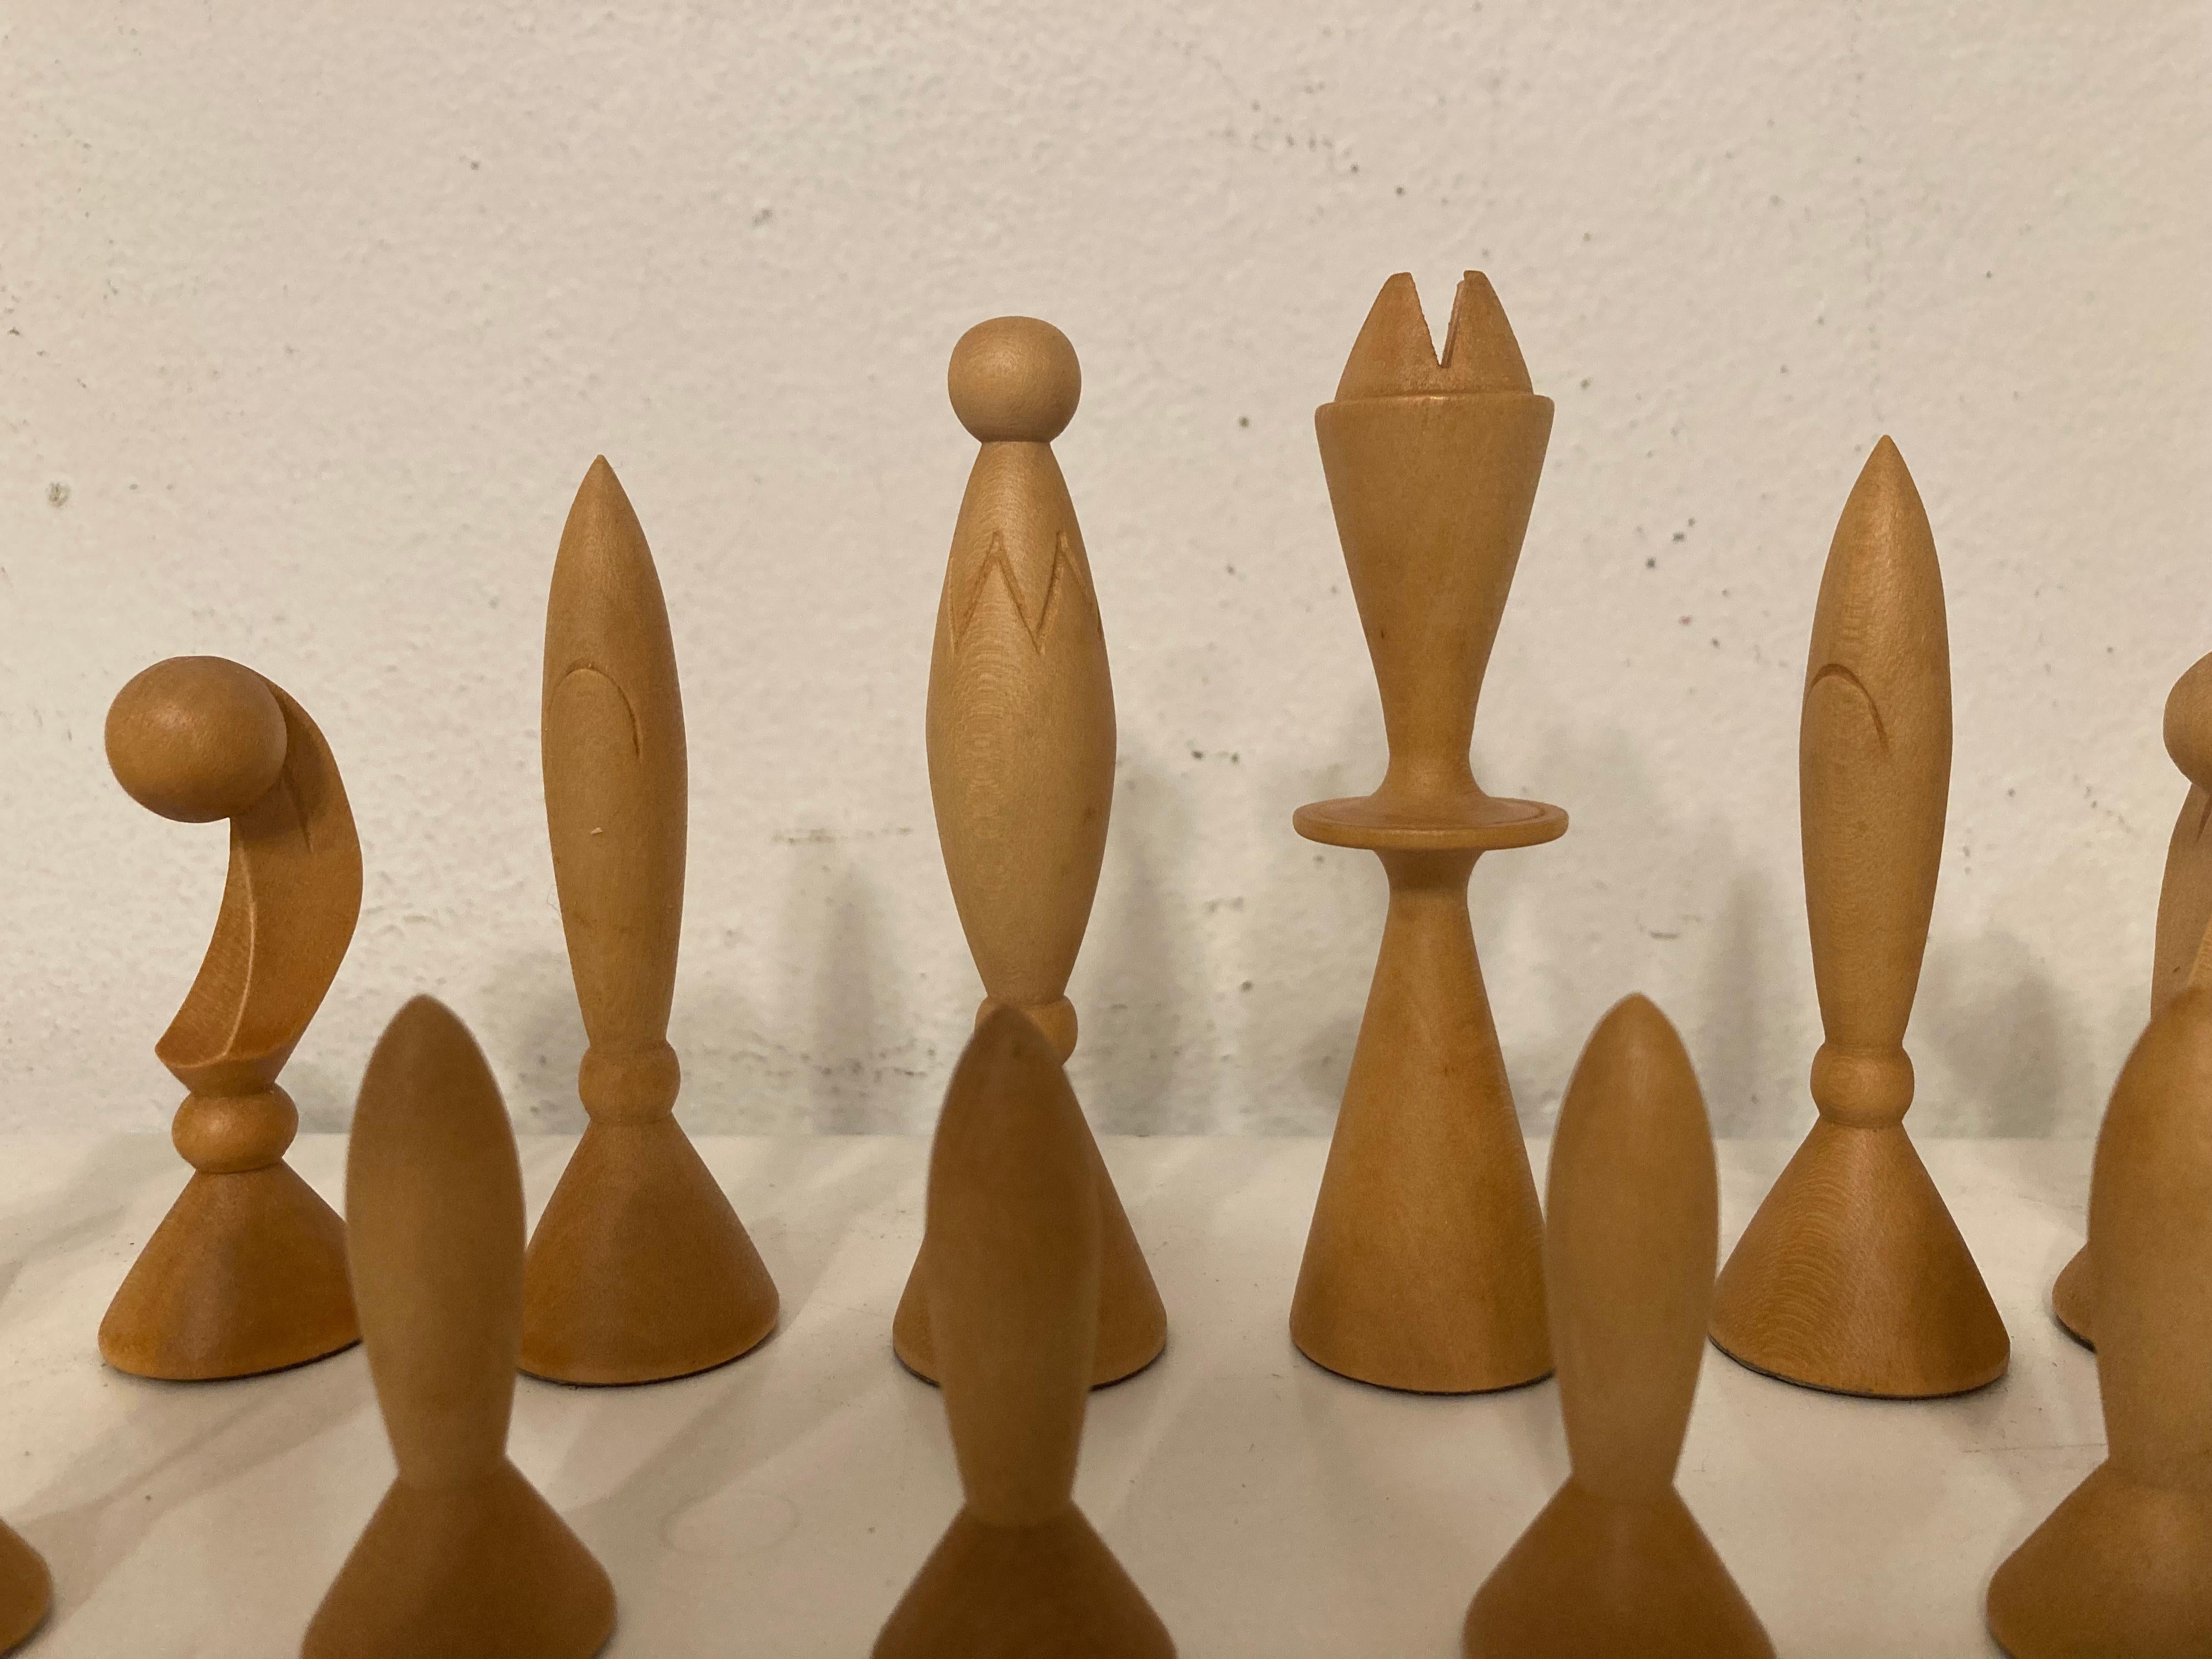 Mid-Century Modern ANRI Space Age Chess Set Designed by Elliott, Walnut, Maple 1950 Italy, No Board For Sale